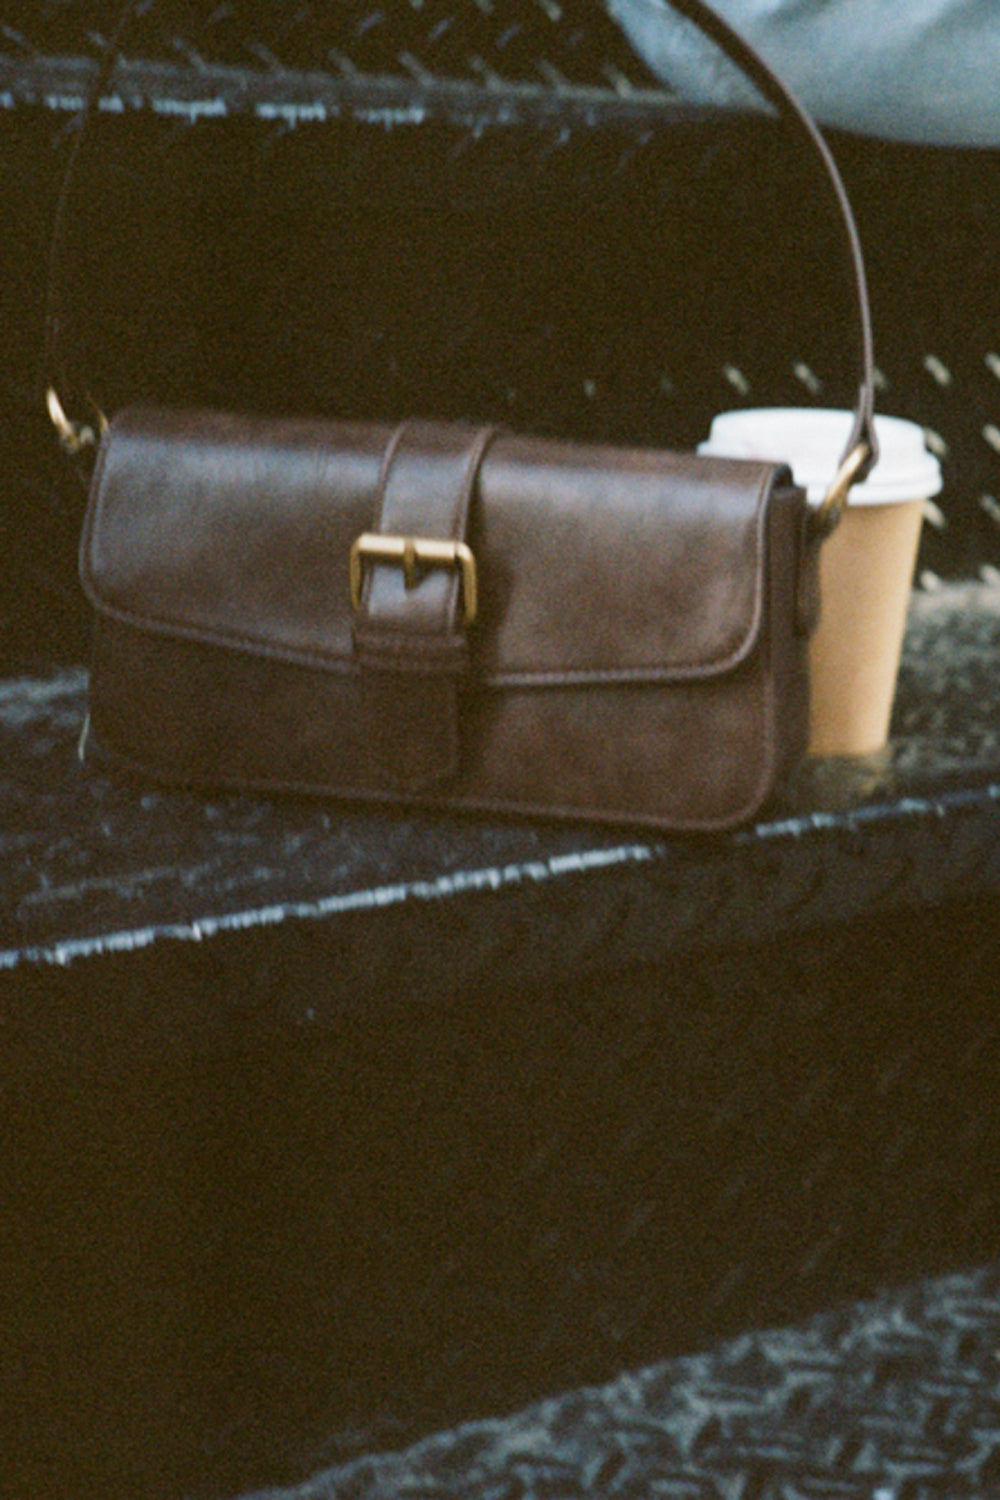 Brandy Melville Messenger Bag